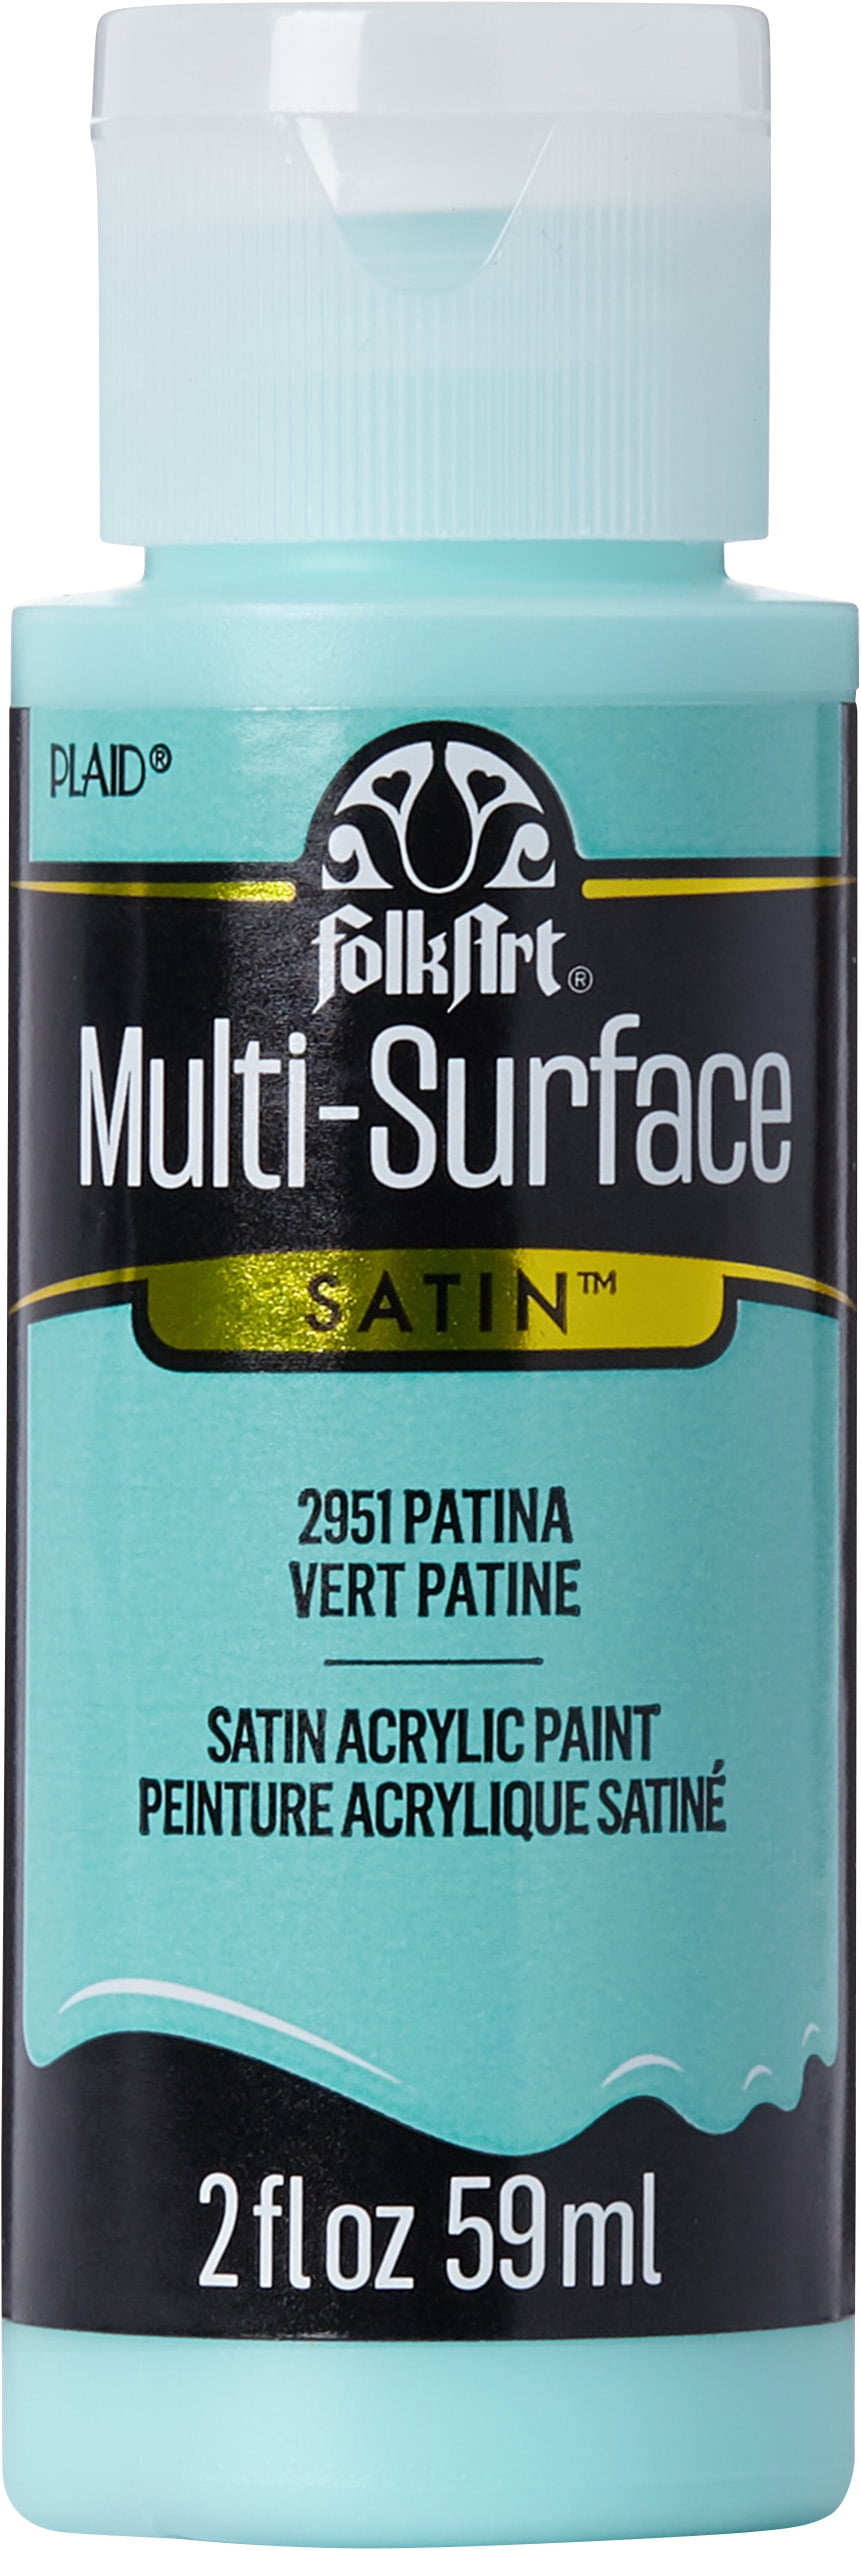 FolkArt Multi-Surface Acrylic Craft Paint, Satin Finish, Patina, 2 fl oz